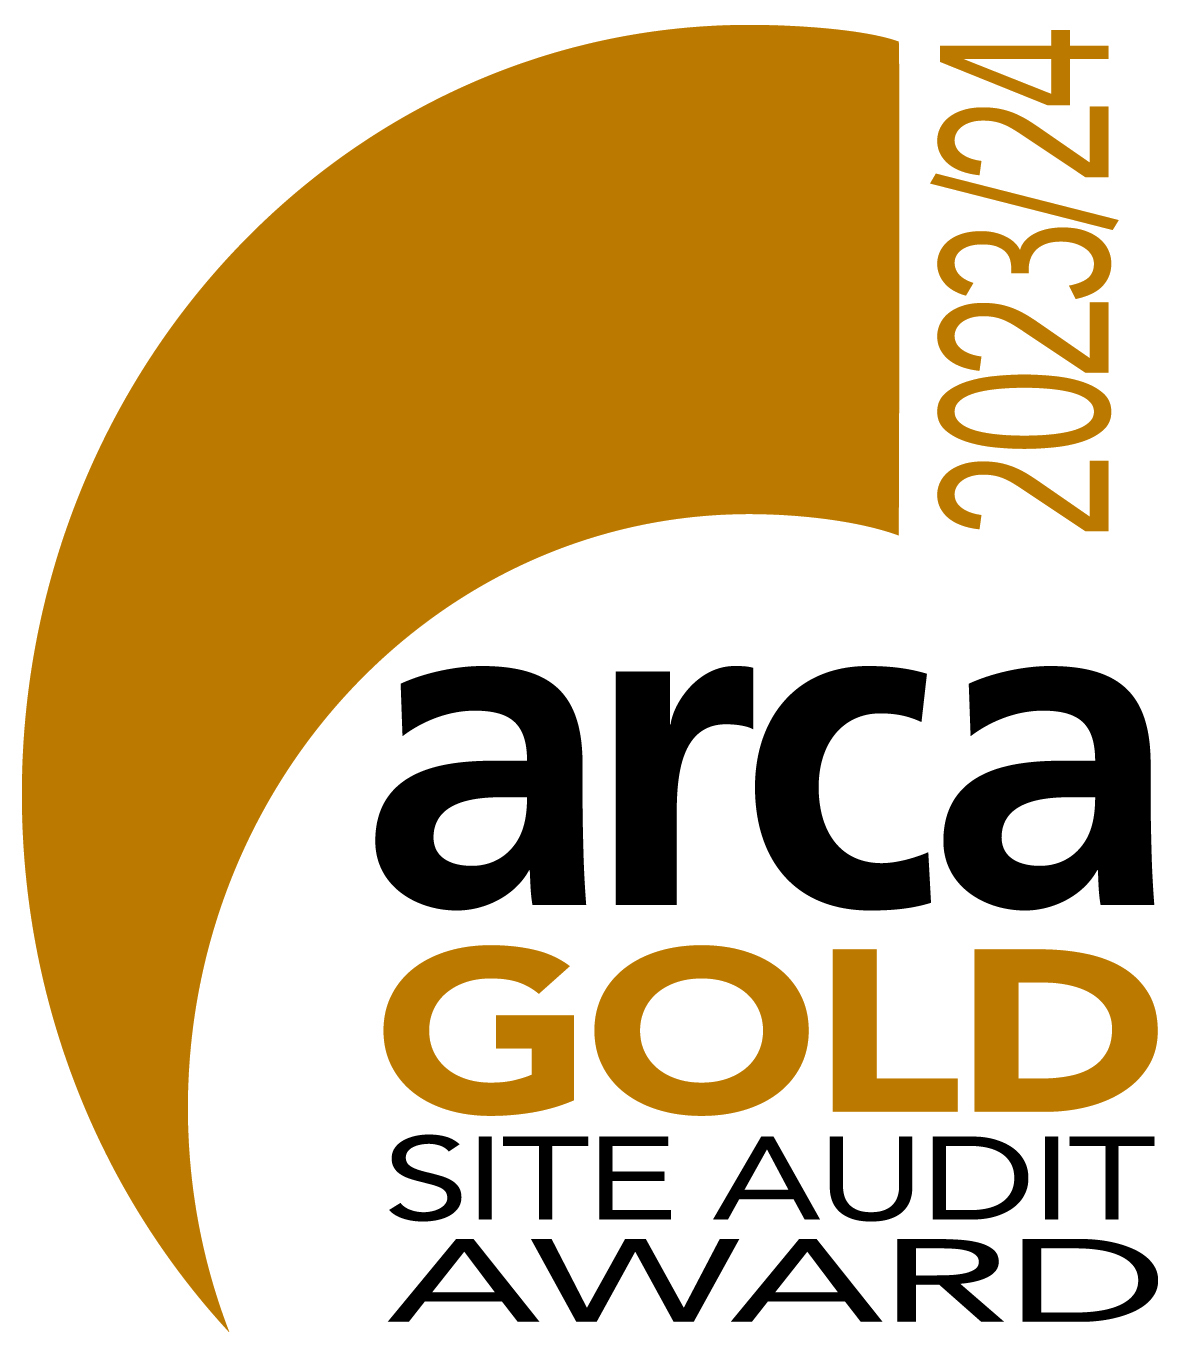 ARCA Gold Site Audit Award 2023/2024 awarded on 17th Aug 2023